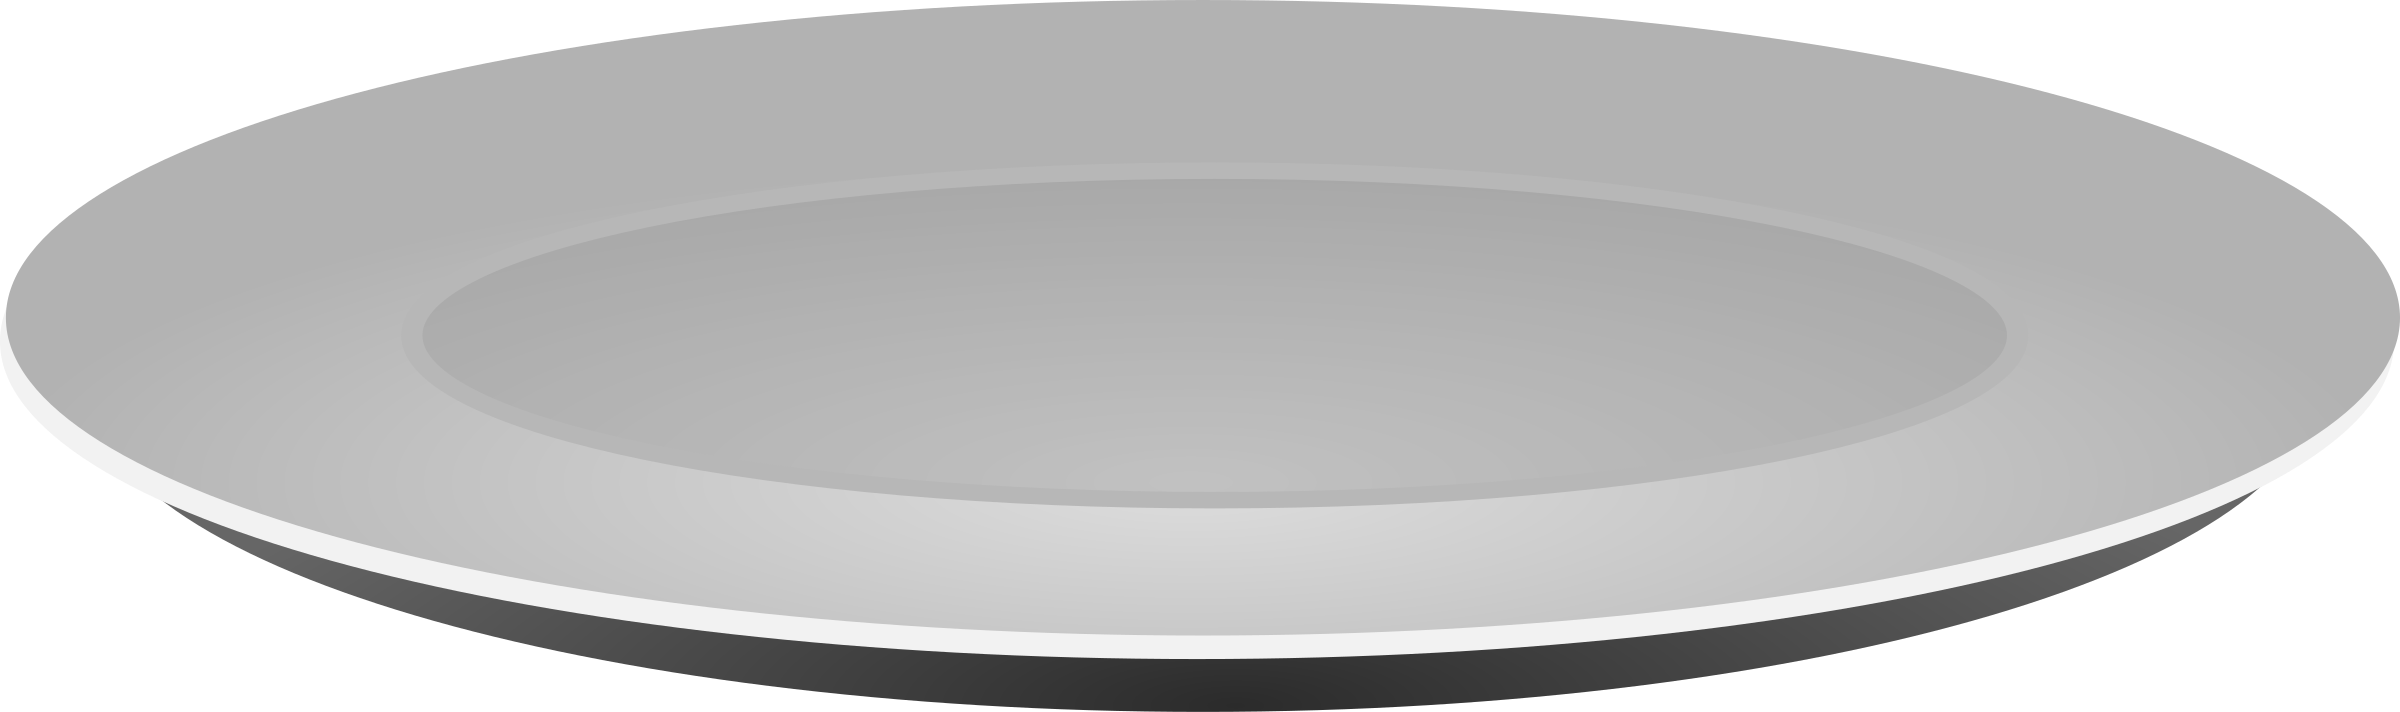 Plain Grey Plate SVG Clip arts